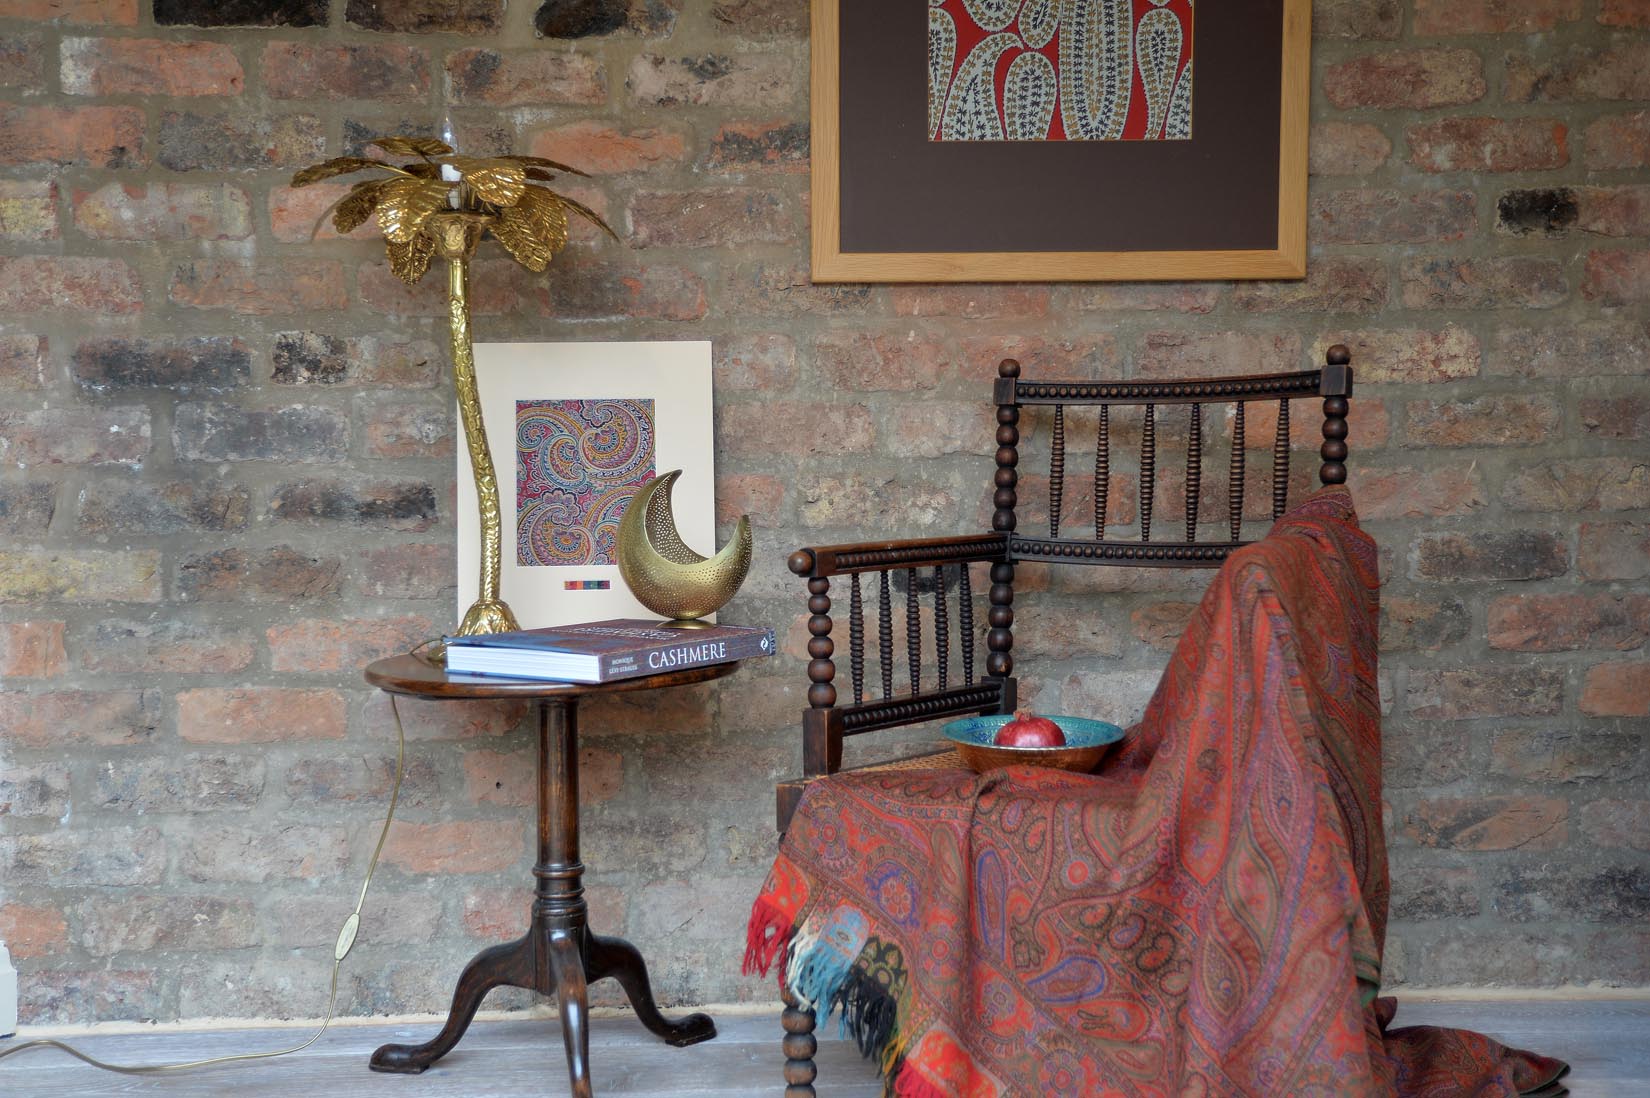 Paisley design on red textile design - Natalia Willmott